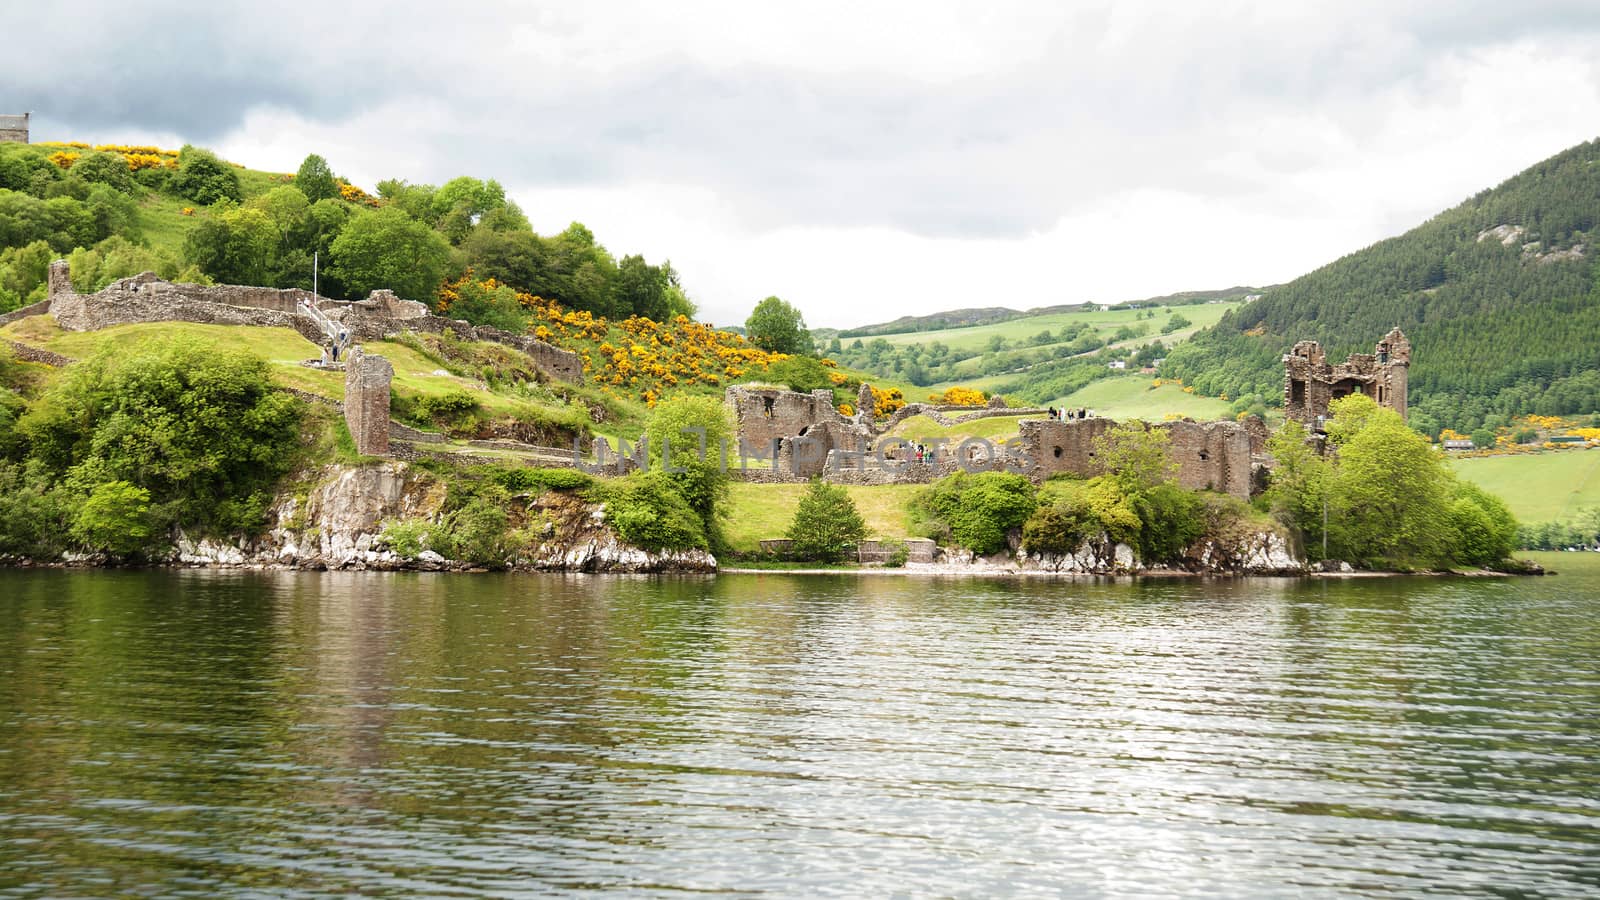 Urquhart Castle at Loch Ness, Scotland by rodrigobellizzi